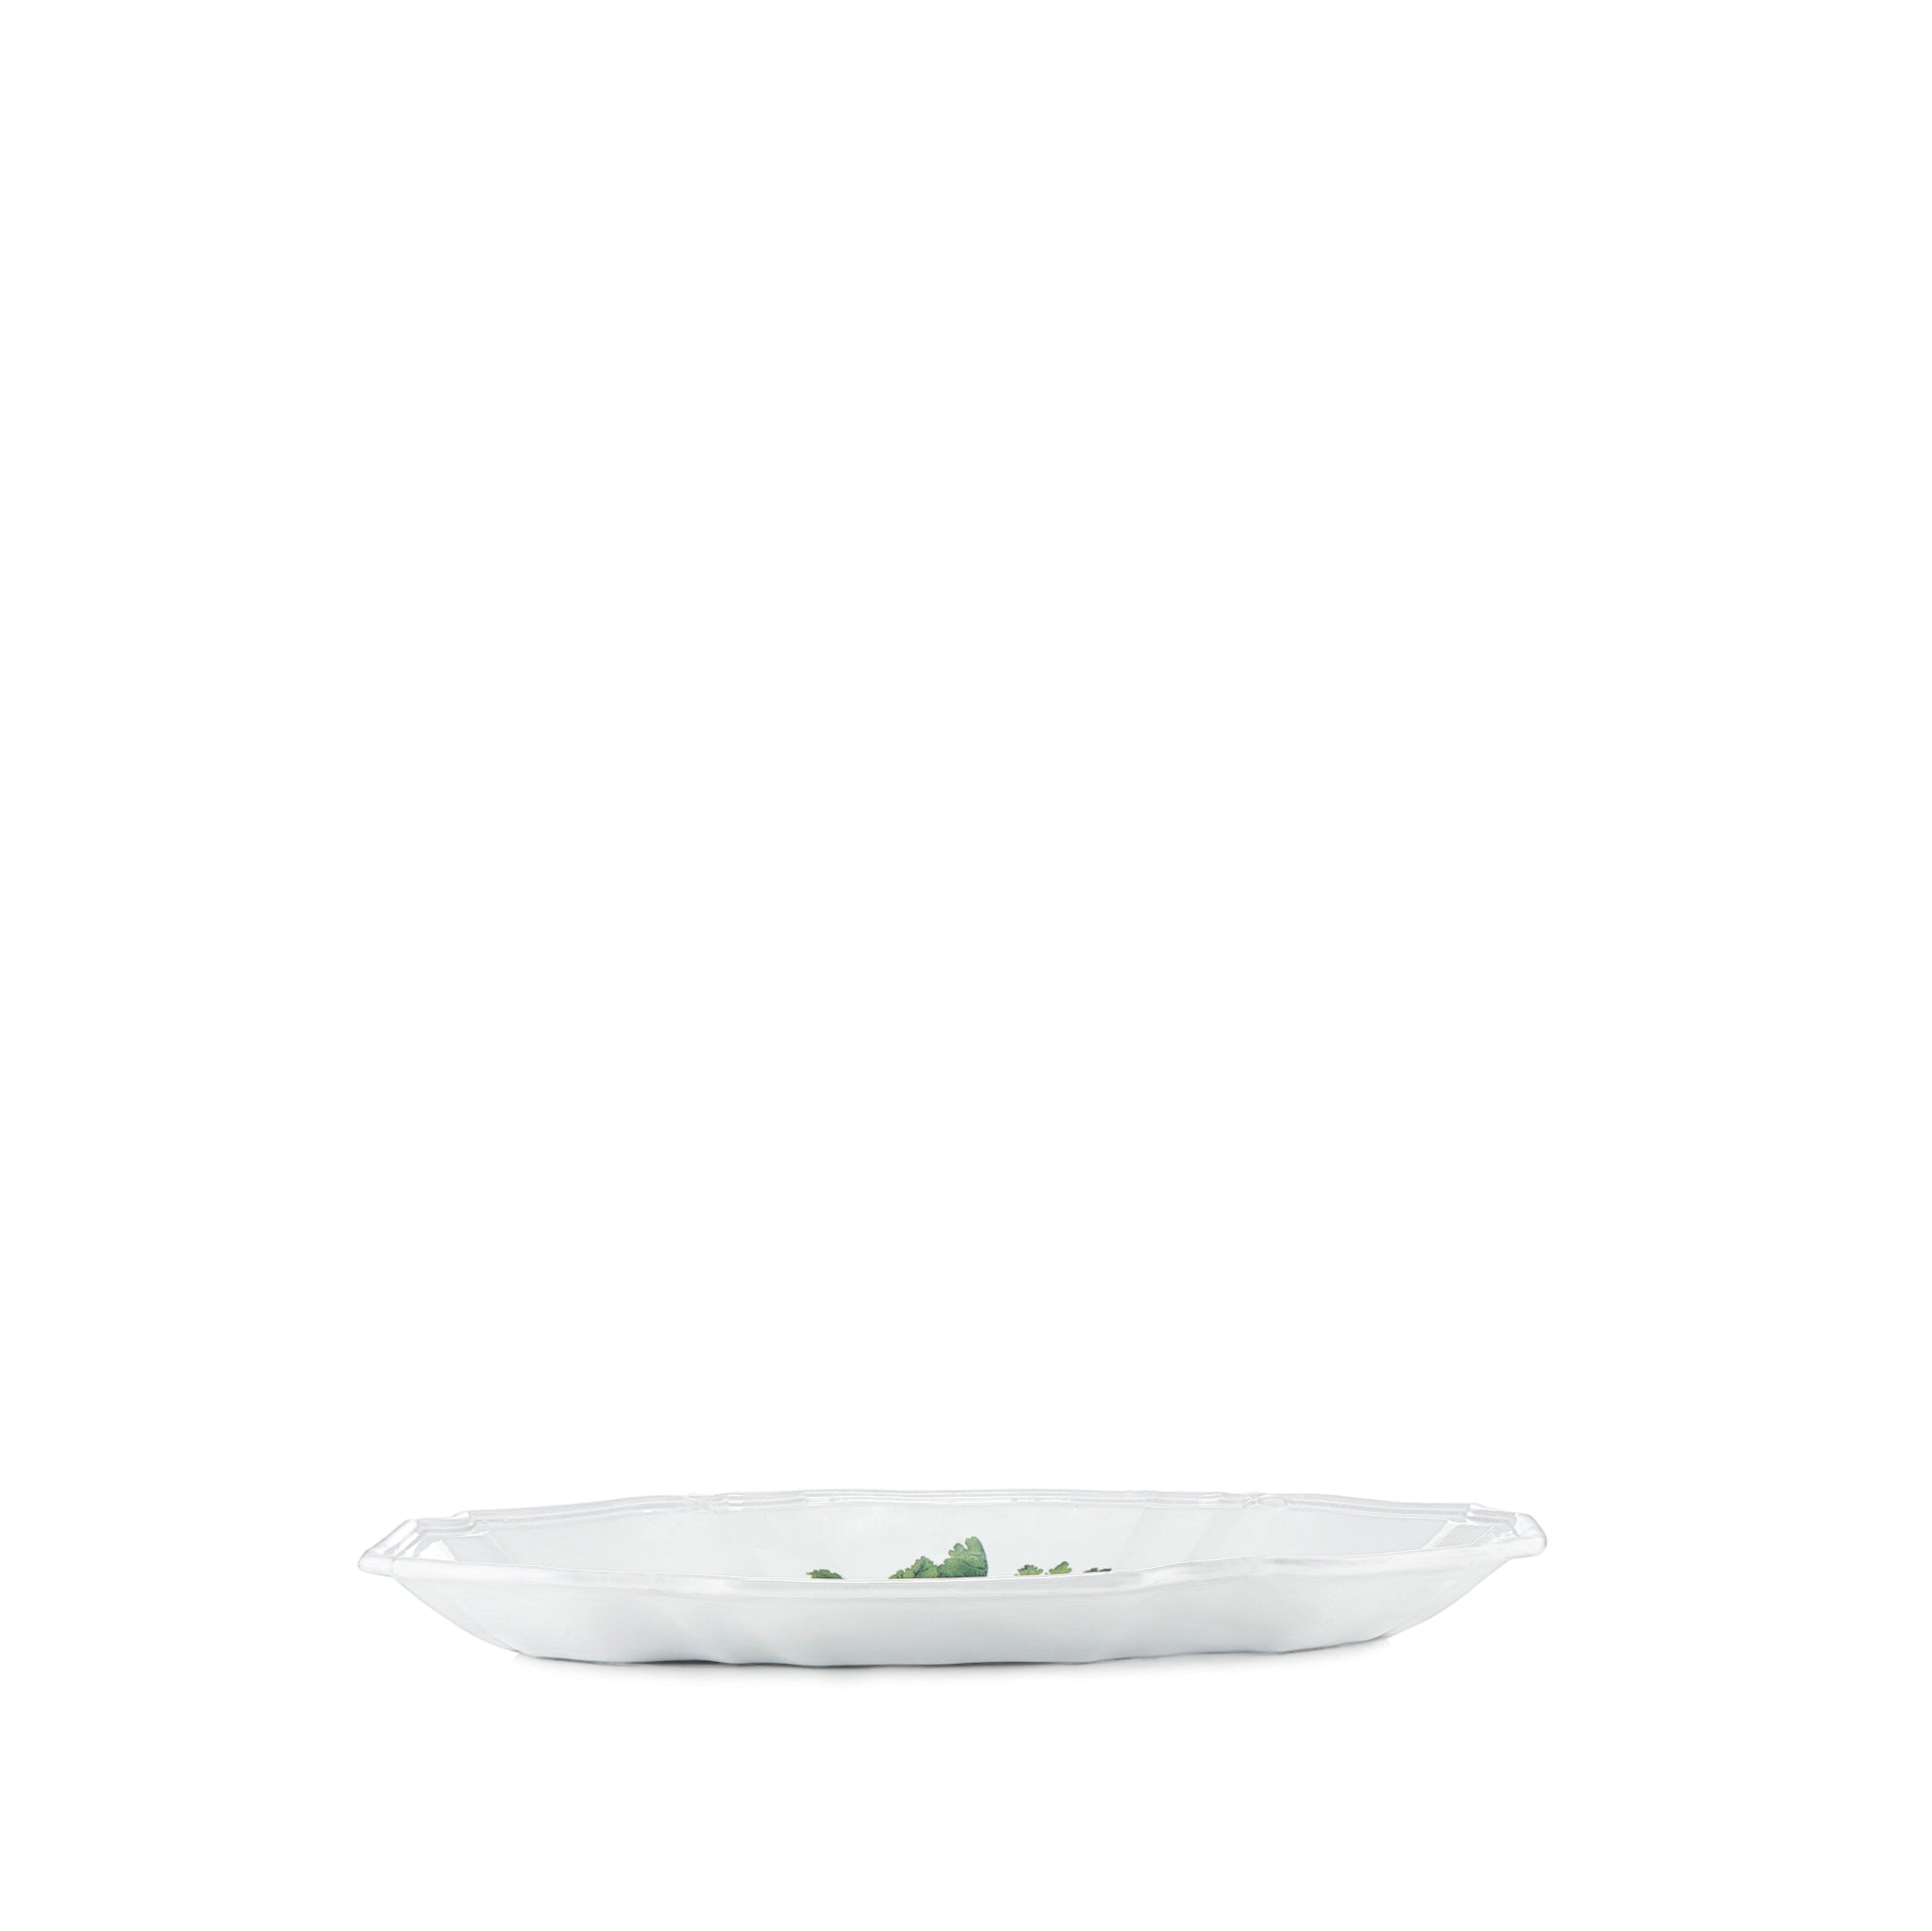 Fern Platter by Astier de Villatte, 40cm